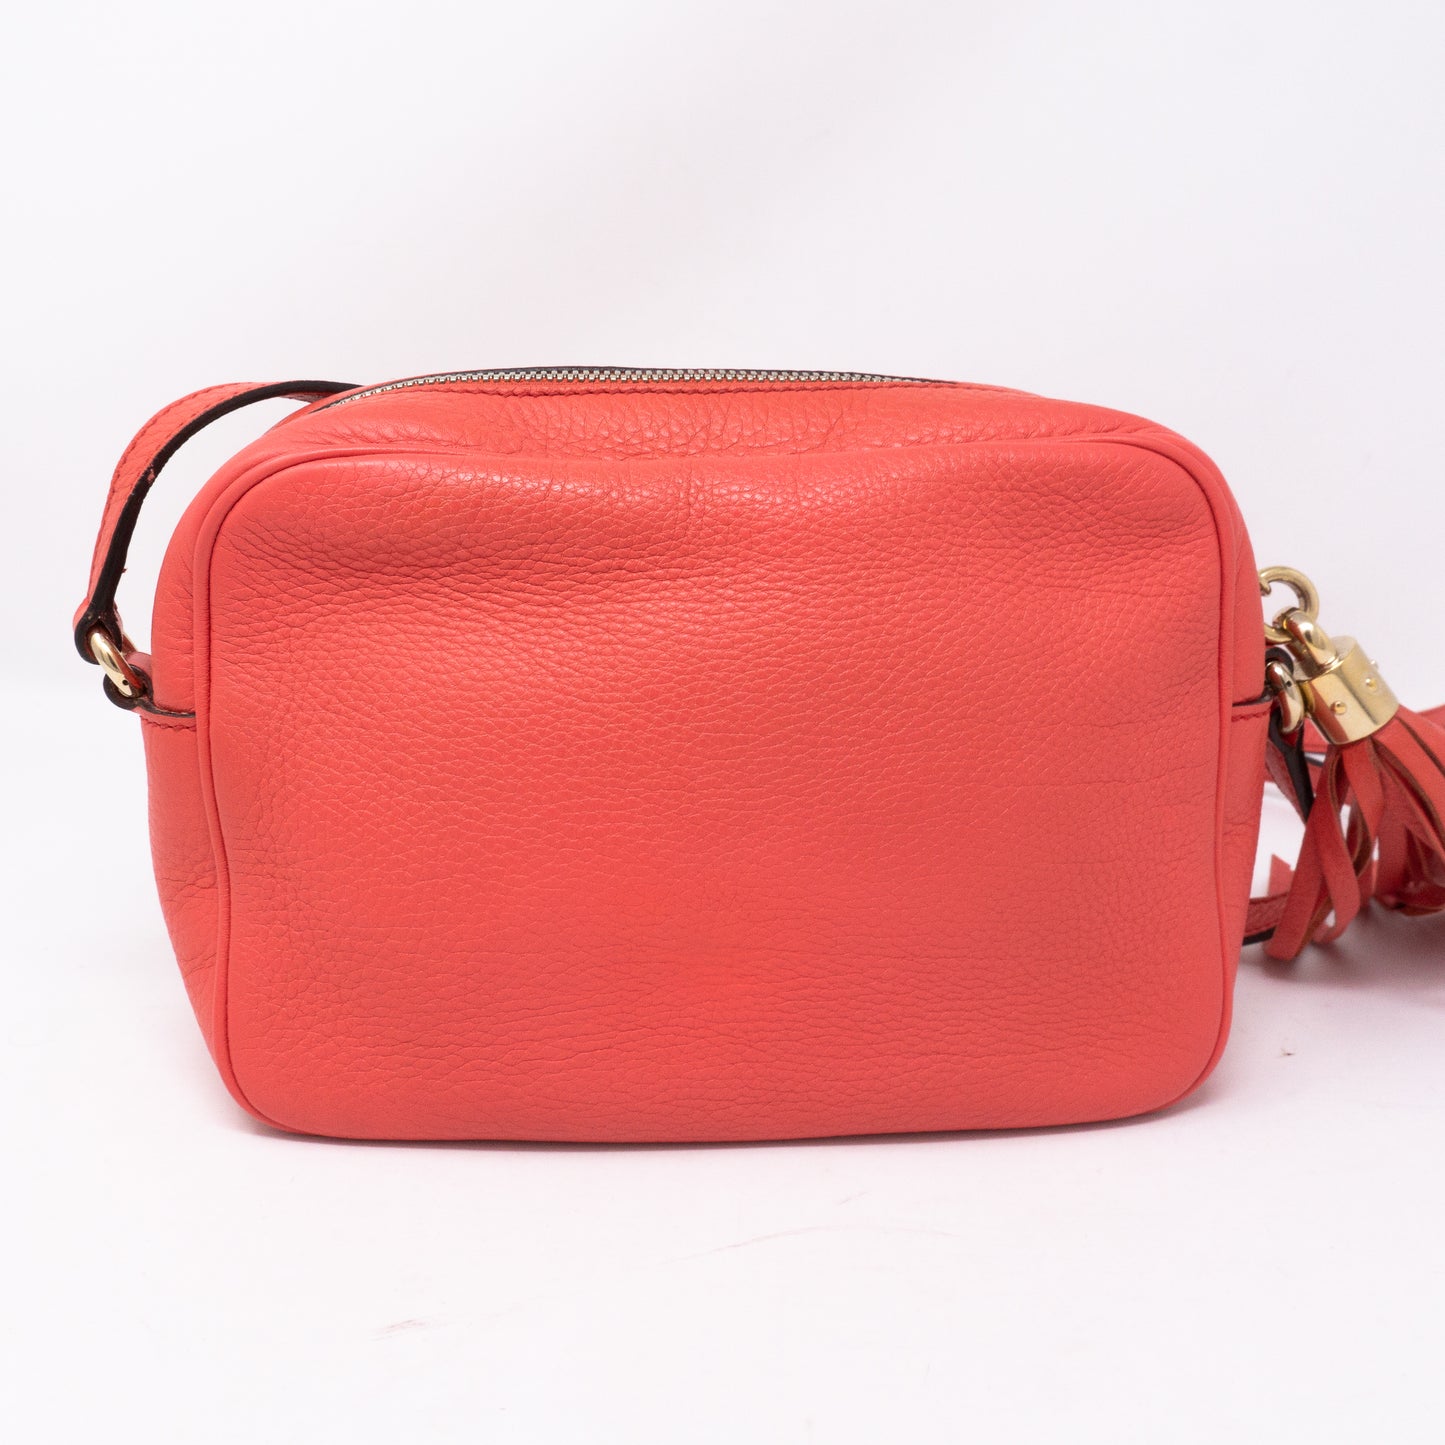 Disco Soho Pink Leather Bag